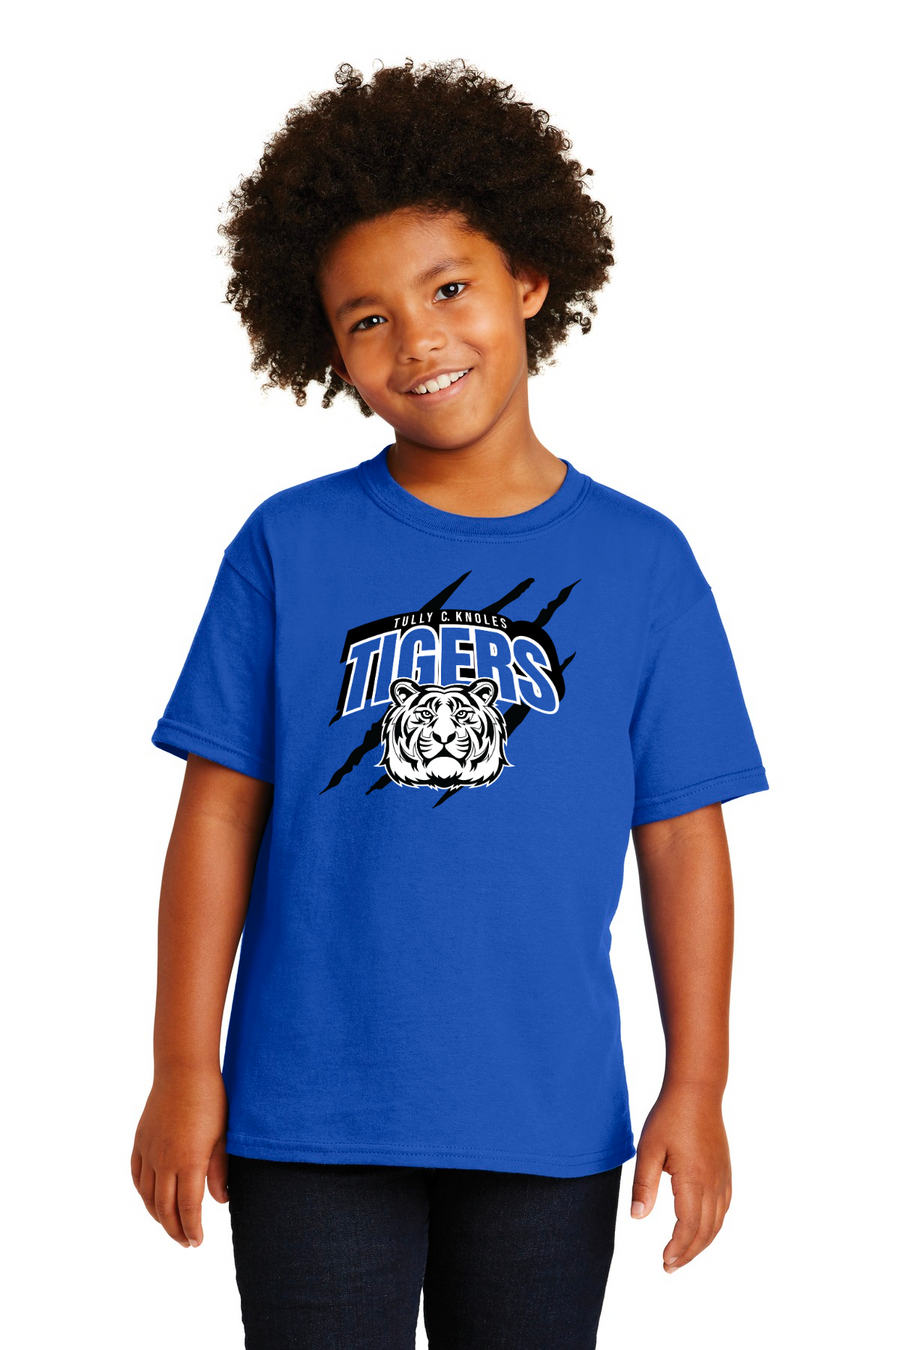 Tully C Knoles - Spirit Wear 23/24 On-Demand-Unisex T-Shirt Tiger Logo